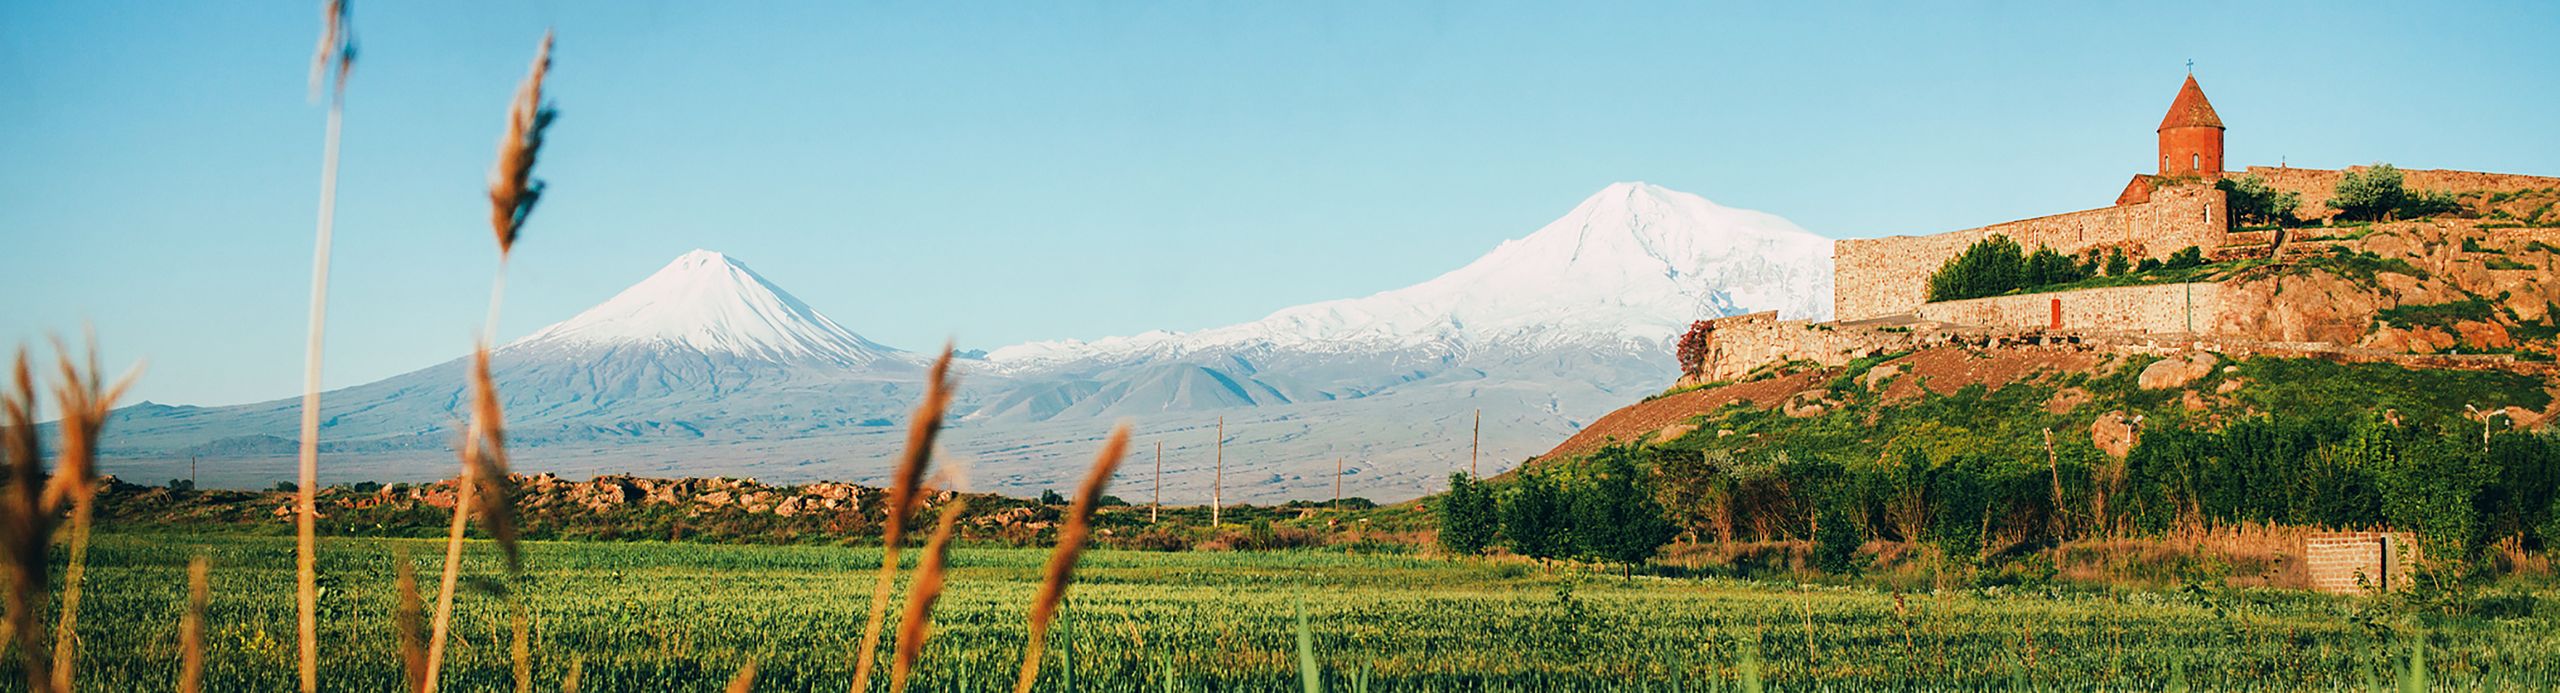 Monastery Ararat